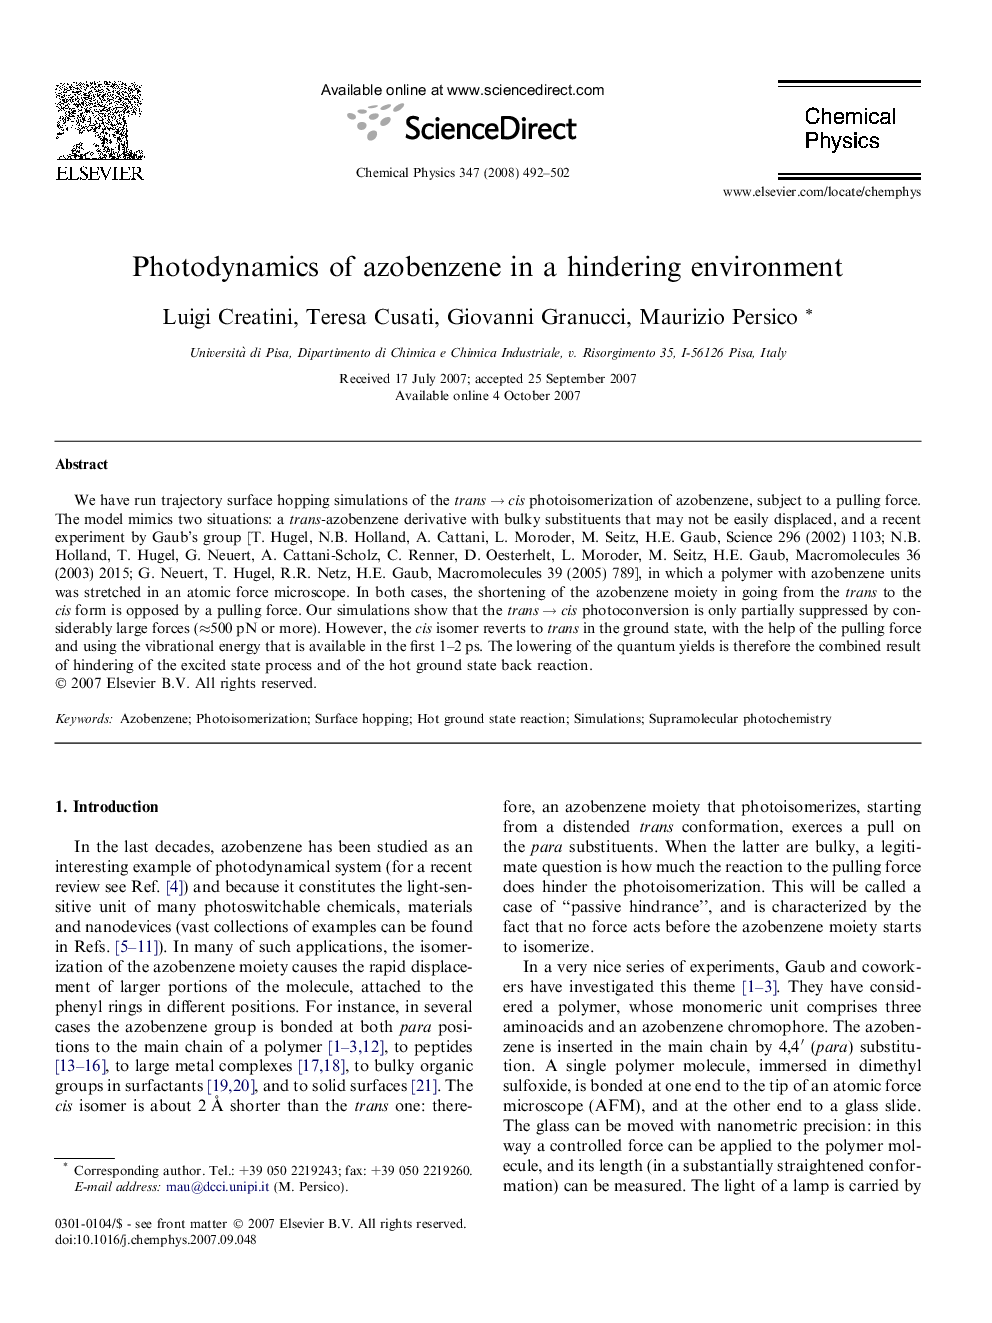 Photodynamics of azobenzene in a hindering environment